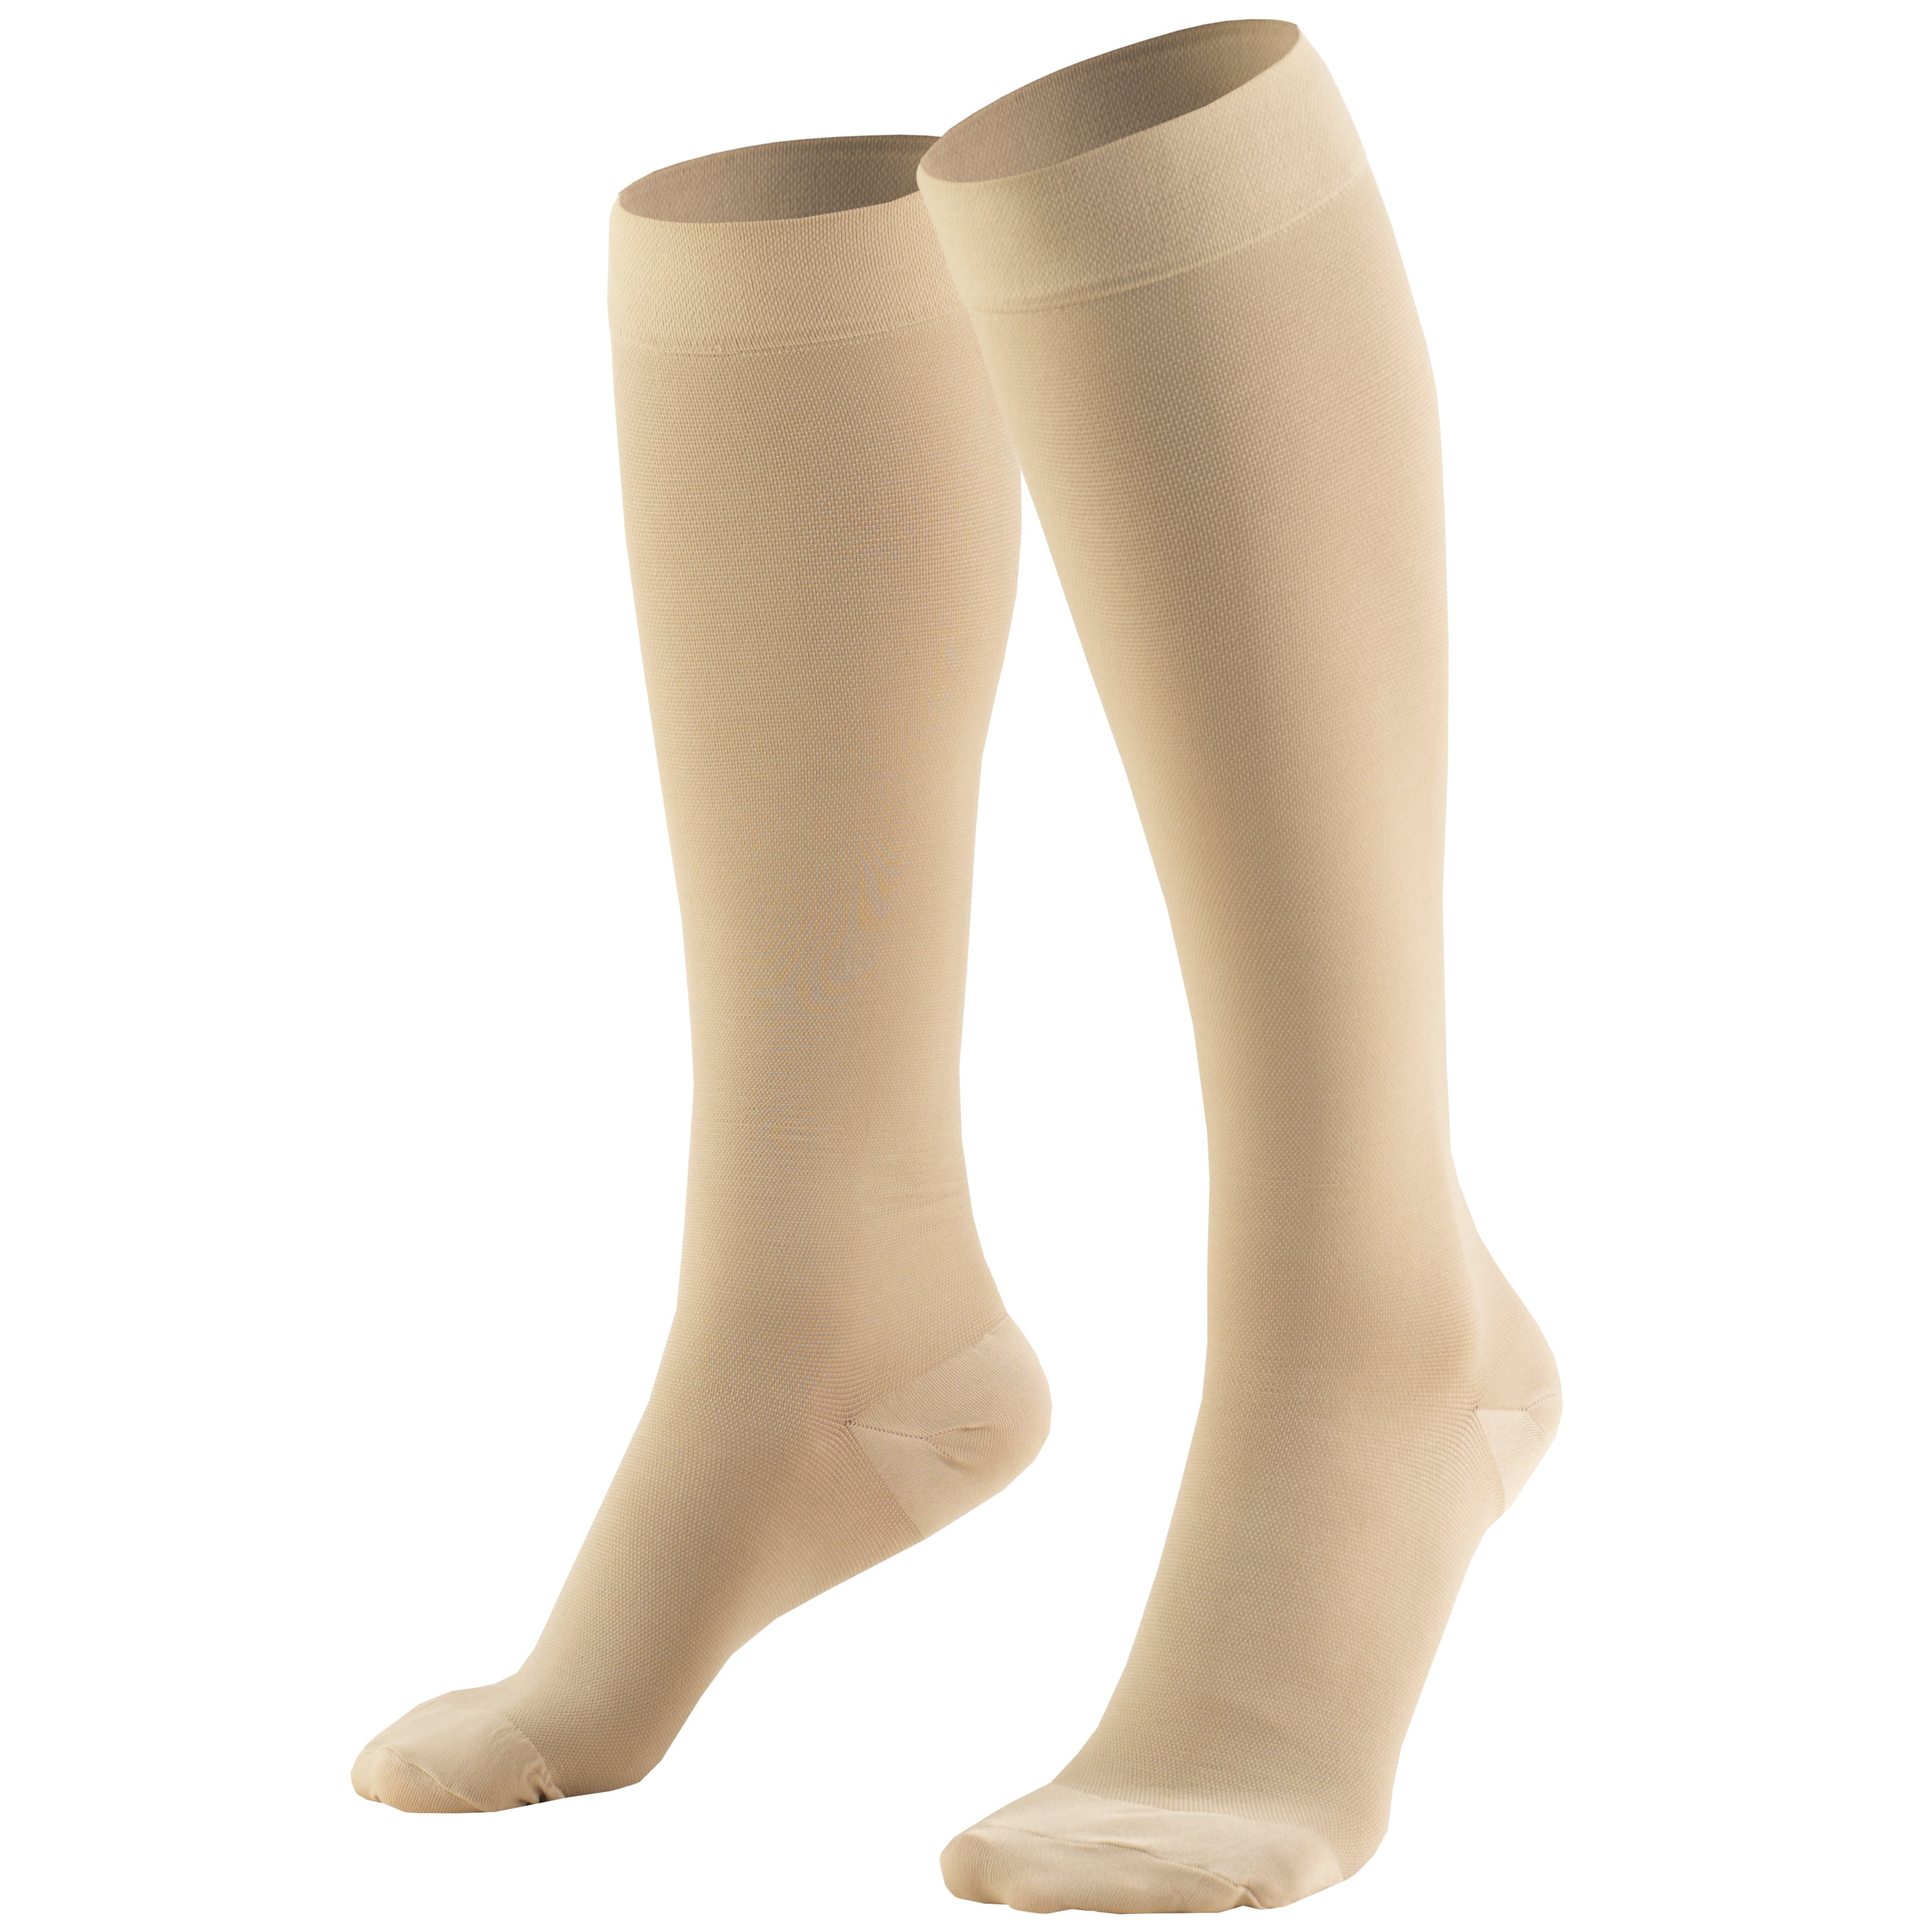 Truform Firm Strength Compression Socks, 20-30 Mmhg, Unisex, Knee High, Closed Toe, Beige, X-Large